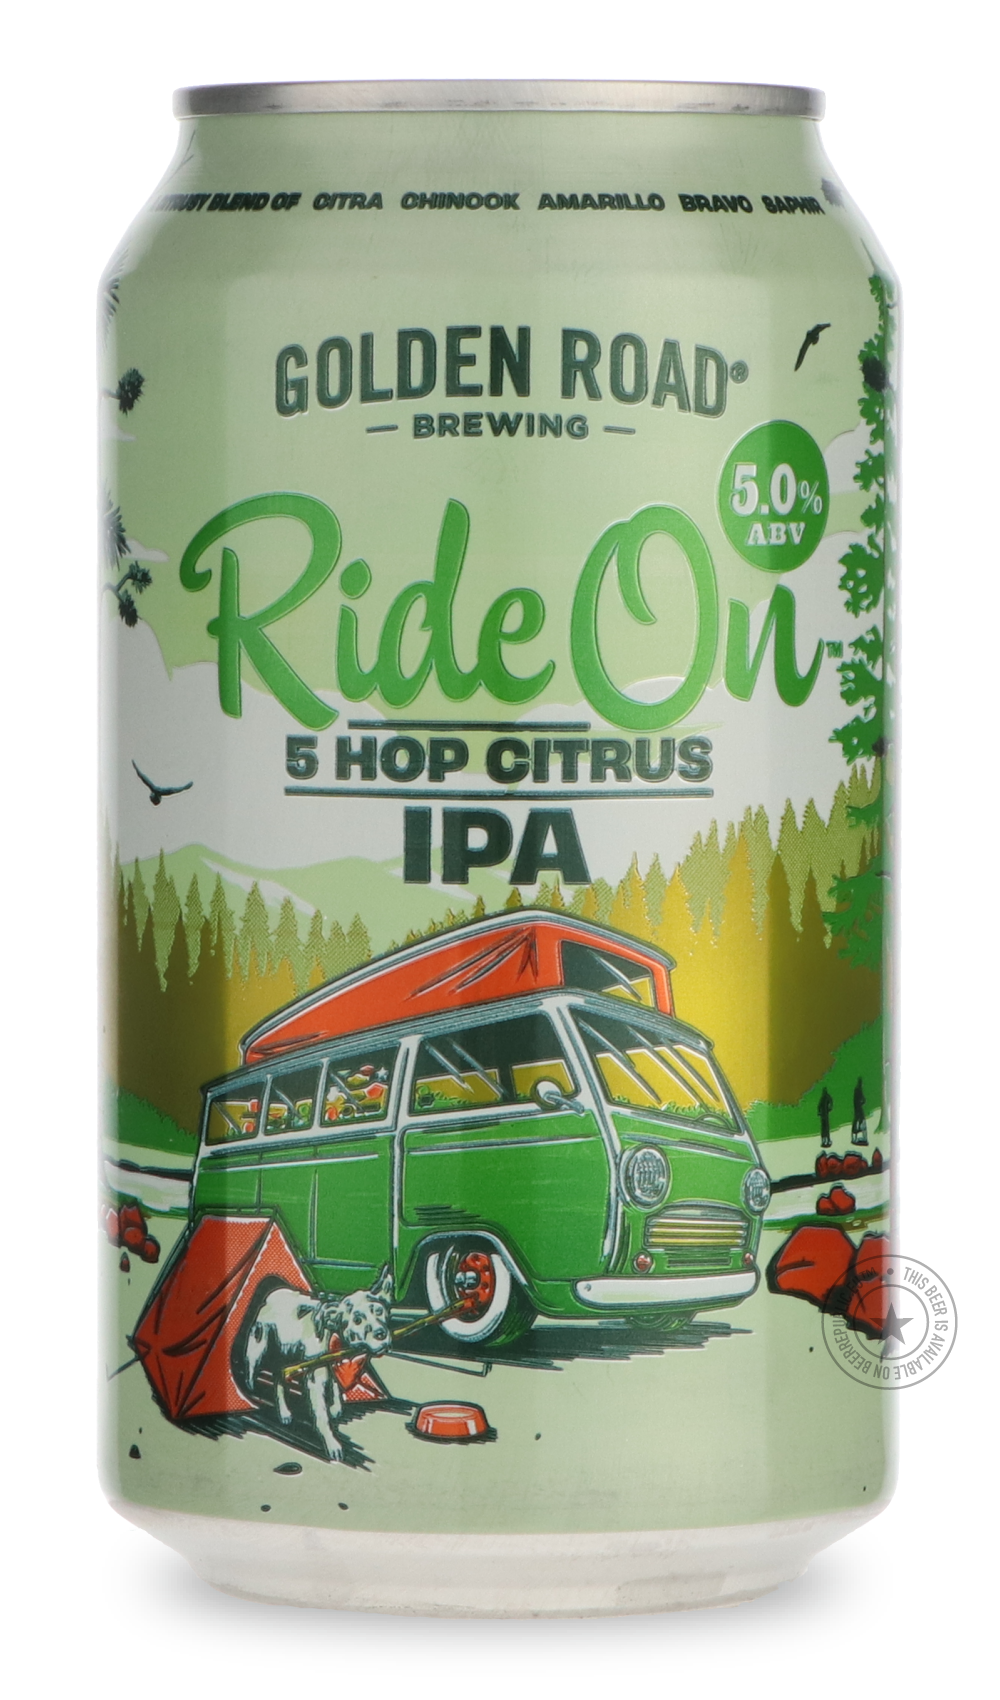 -Golden Road- Ride On 5 Hop Citrus-IPA- Only @ Beer Republic - The best online beer store for American & Canadian craft beer - Buy beer online from the USA and Canada - Bier online kopen - Amerikaans bier kopen - Craft beer store - Craft beer kopen - Amerikanisch bier kaufen - Bier online kaufen - Acheter biere online - IPA - Stout - Porter - New England IPA - Hazy IPA - Imperial Stout - Barrel Aged - Barrel Aged Imperial Stout - Brown - Dark beer - Blond - Blonde - Pilsner - Lager - Wheat - Weizen - Amber 